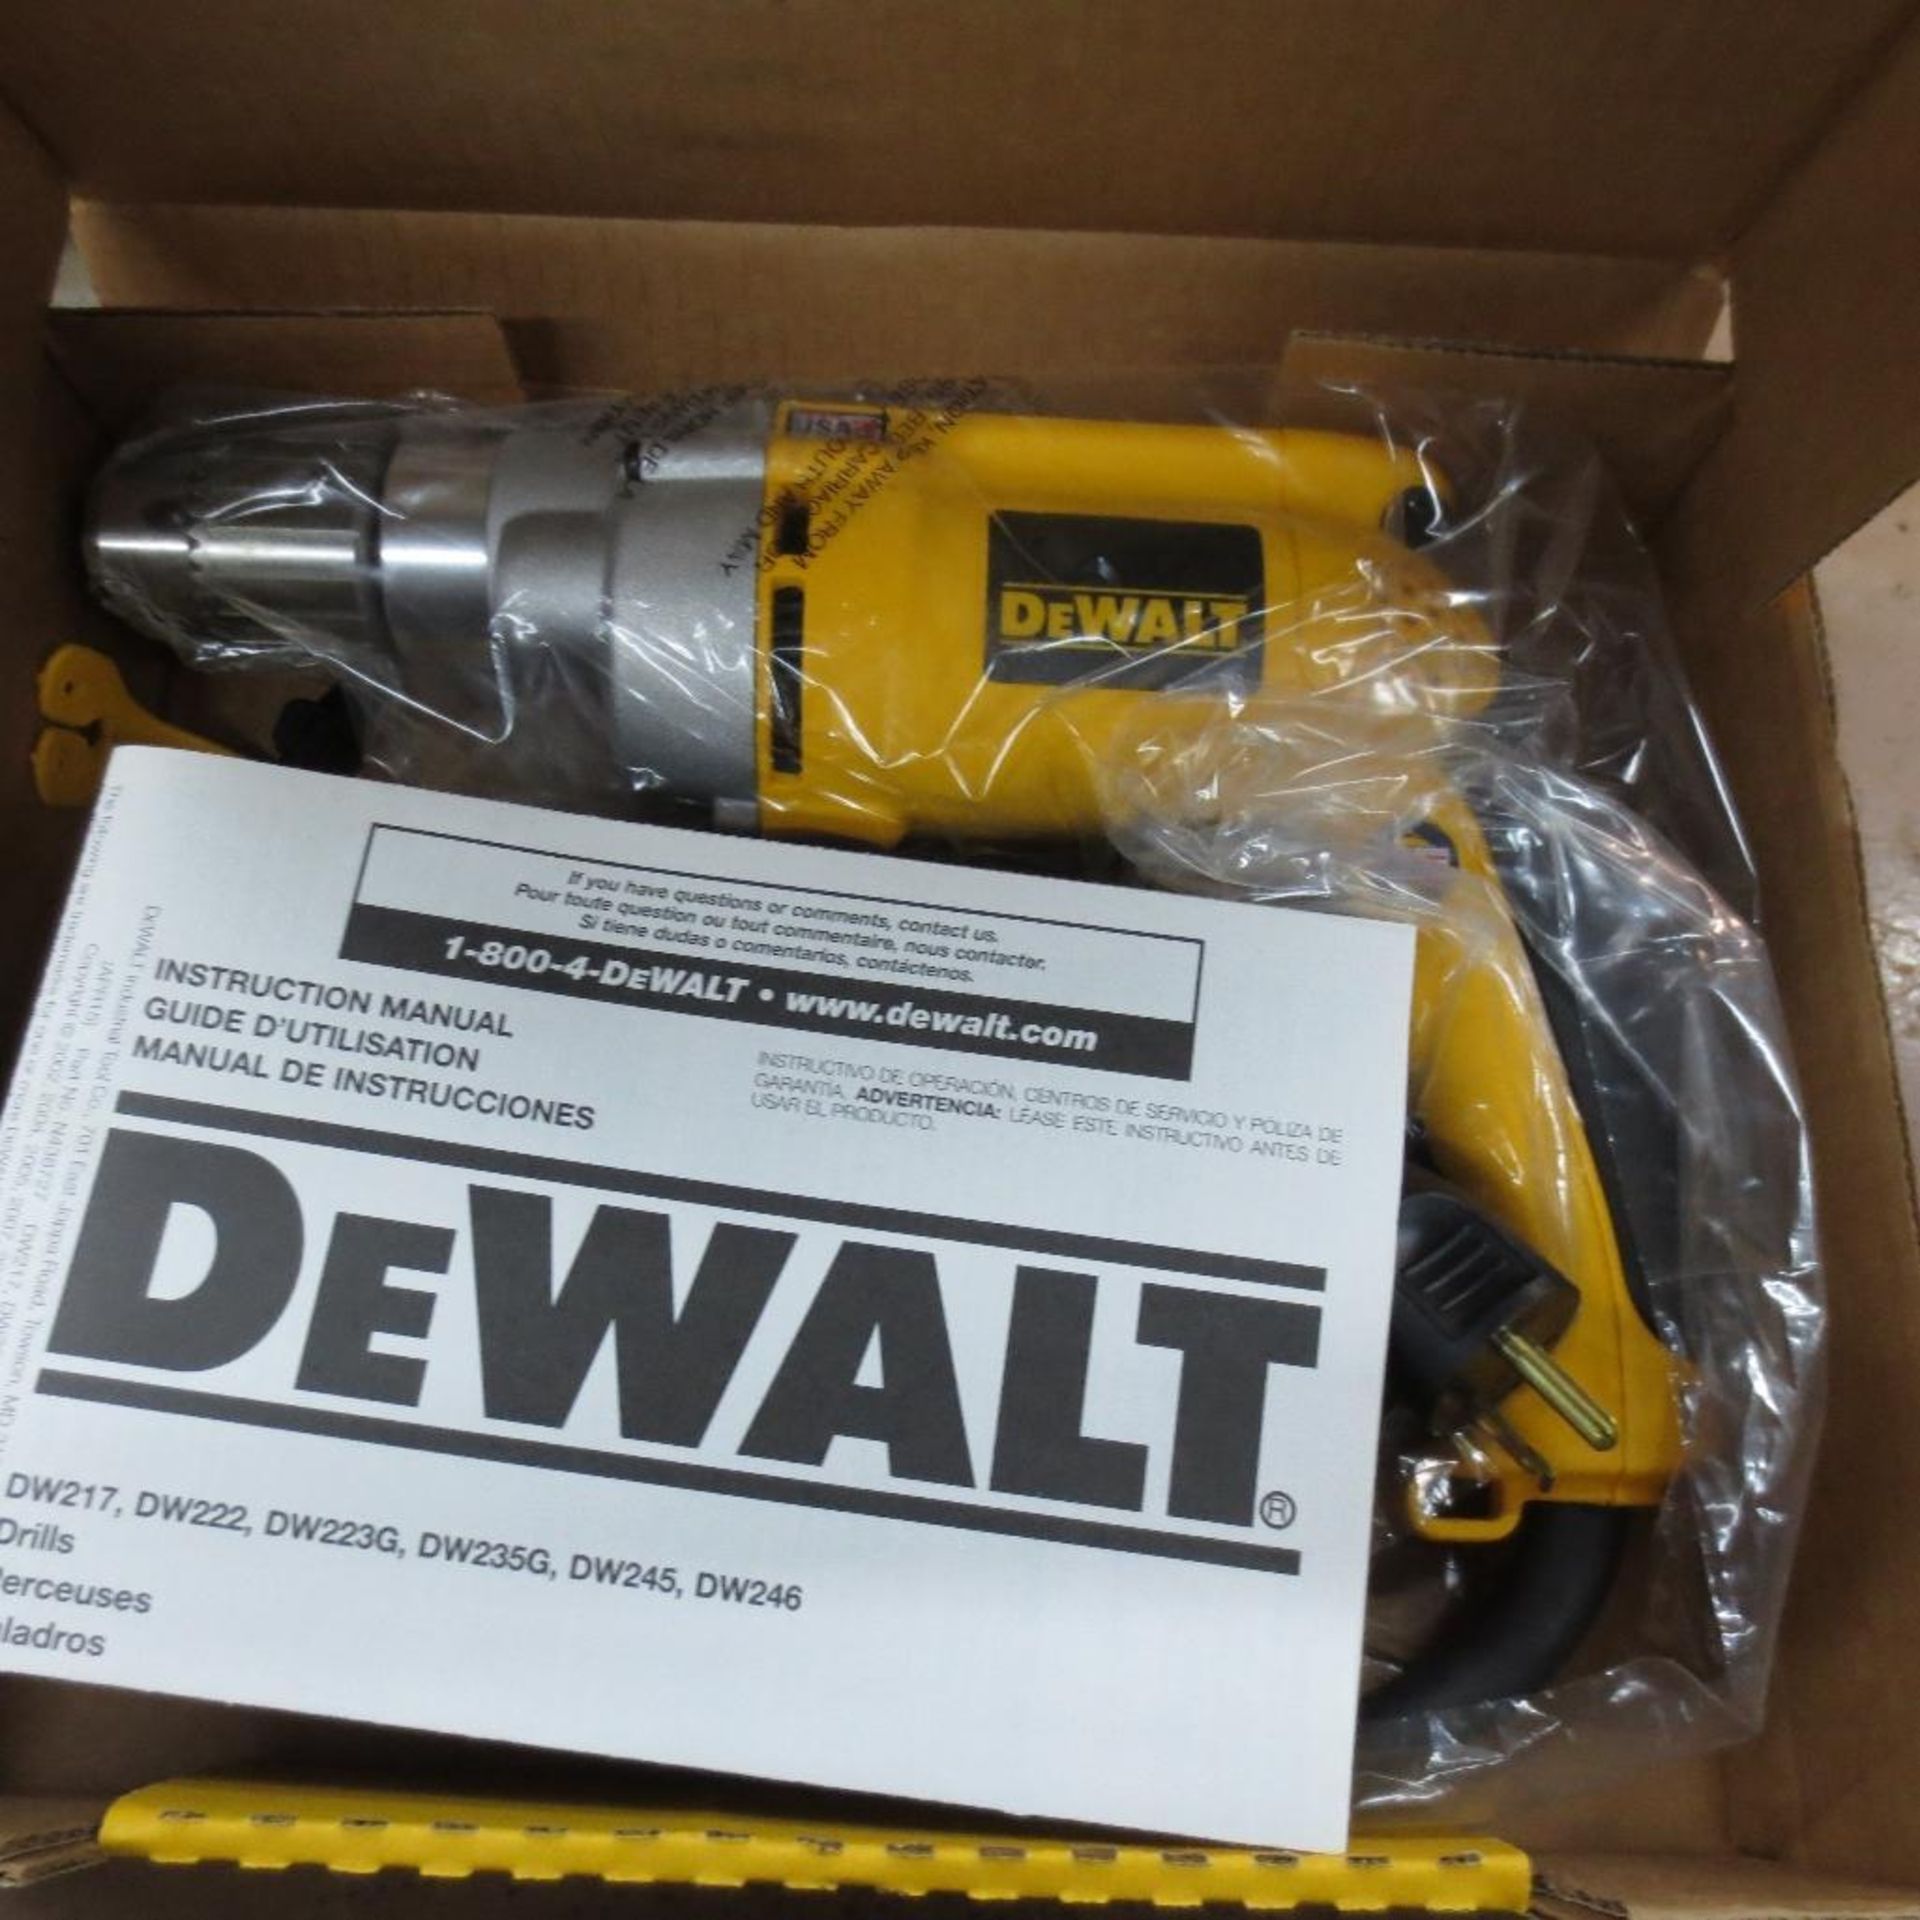 (3) Dewalt DW235G Drills - Image 3 of 3